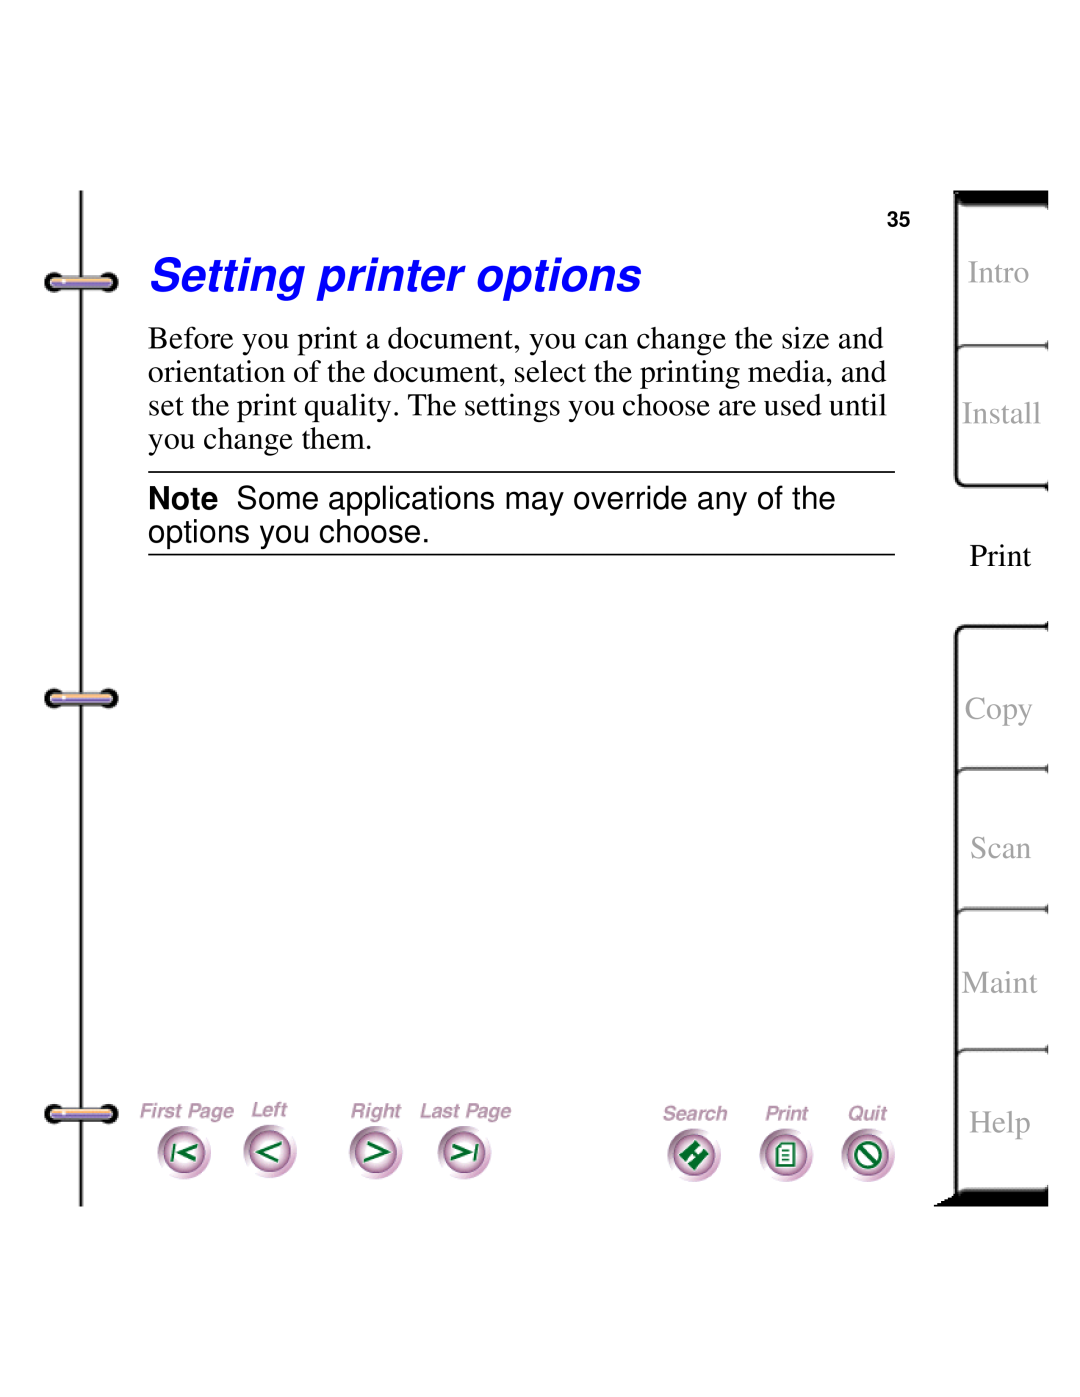 Xerox Document HomeCentre manual Setting printer options, Intro Install, Print, Copy Scan Maint, Help 